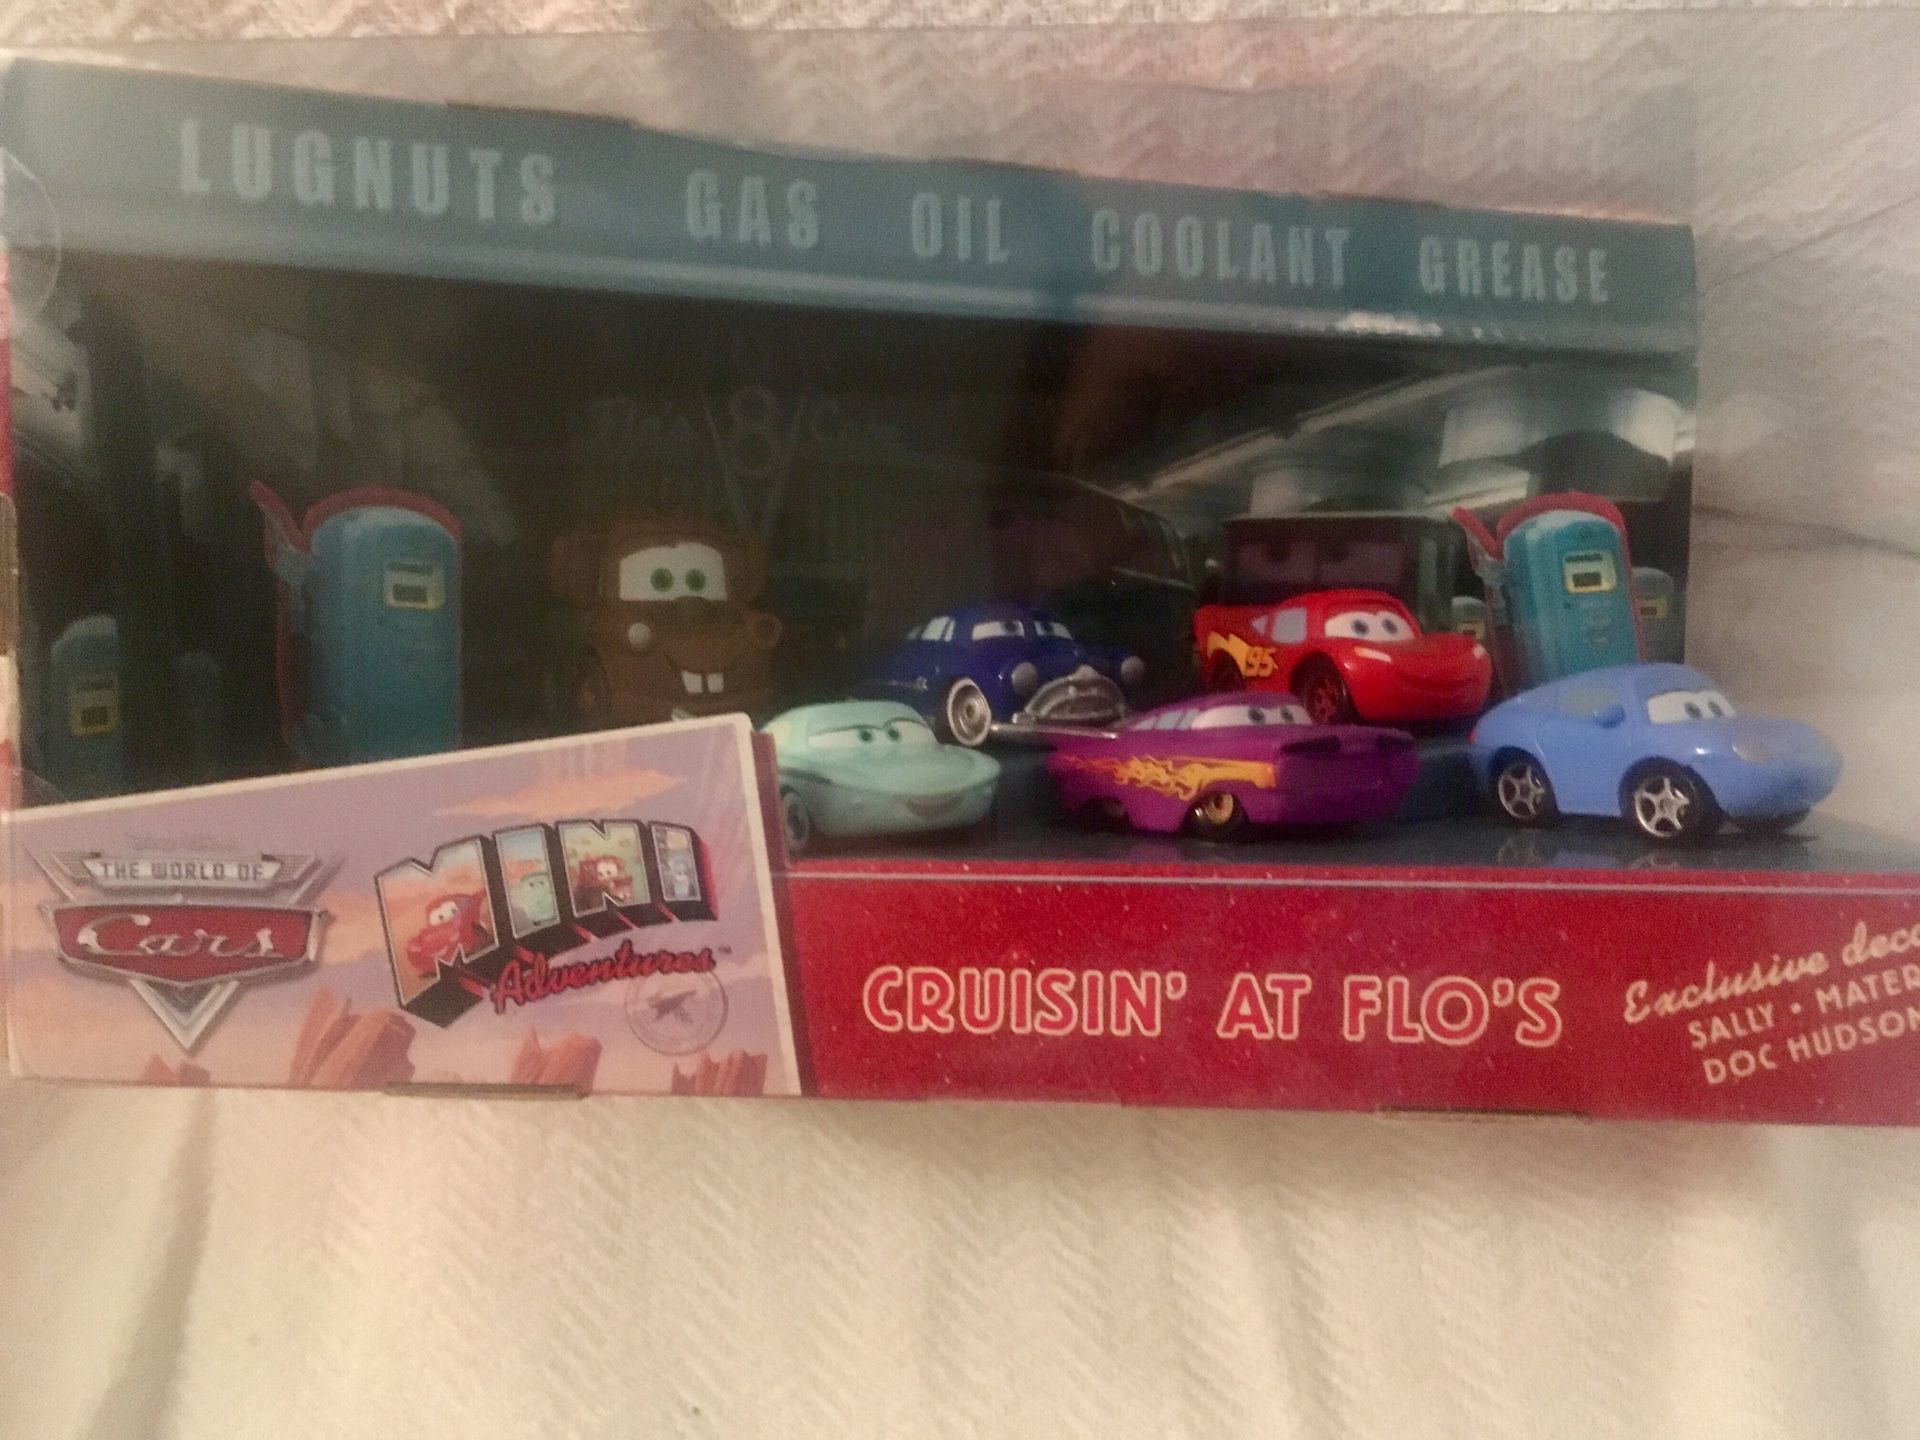 Disney Pixar's Cars Cruisin at Flo's shop